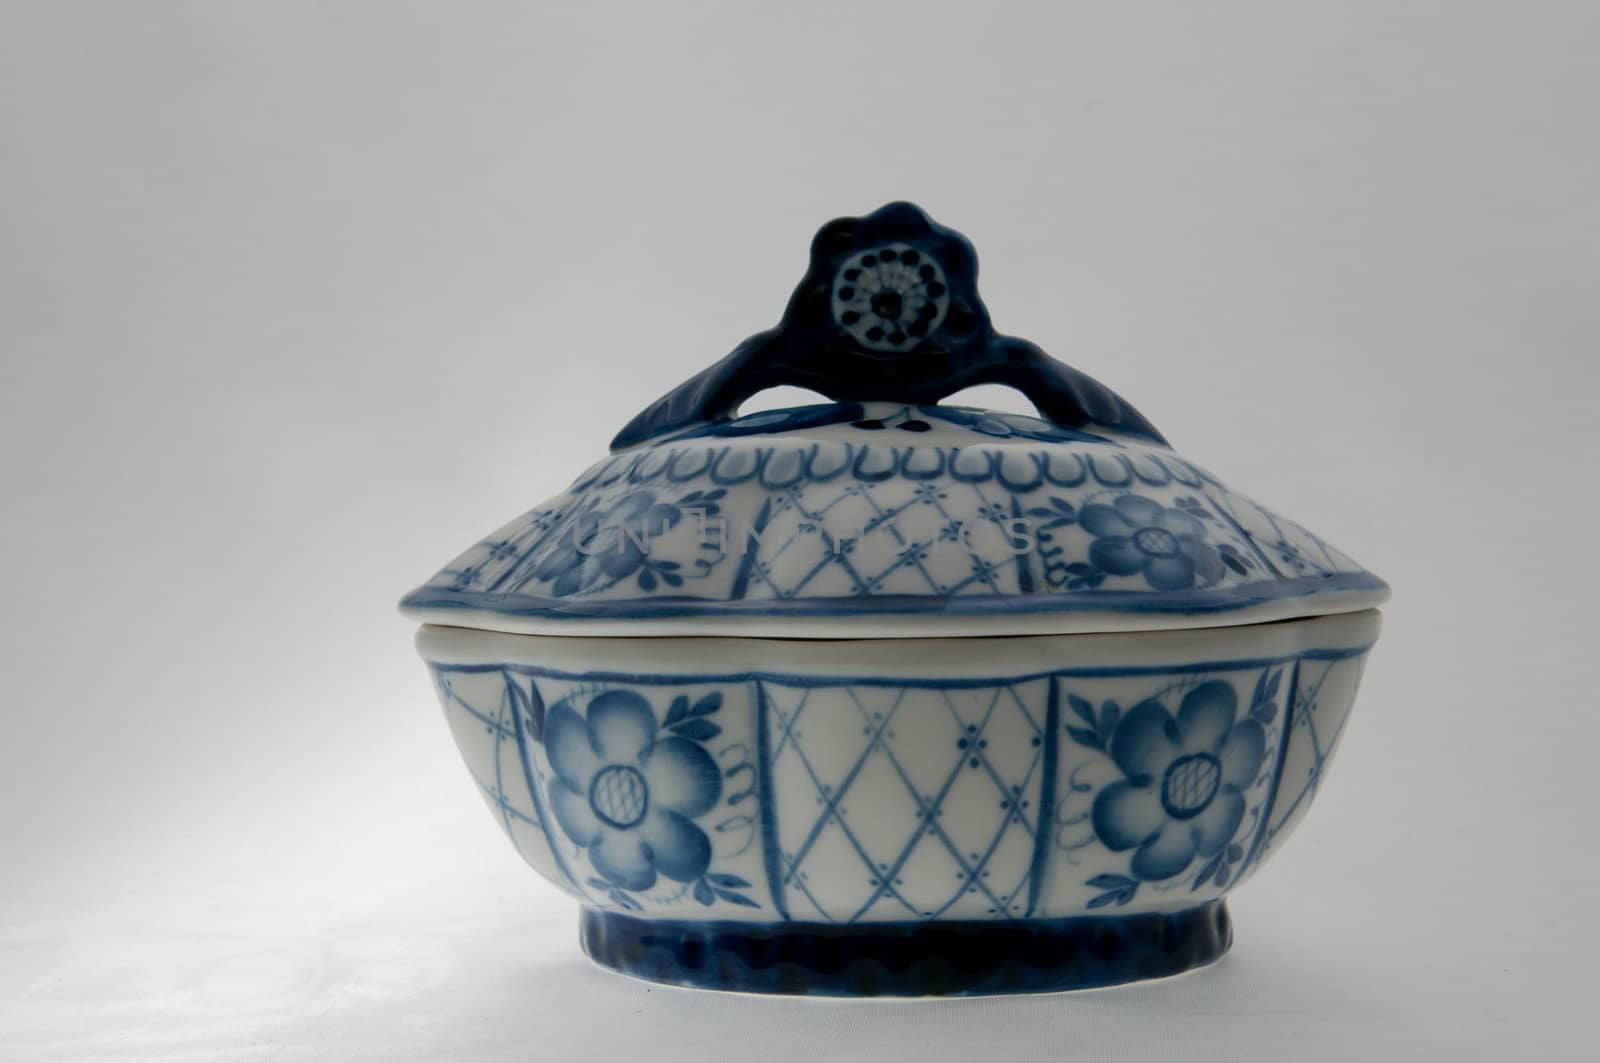 the picture of the russian ceramic gzhel art